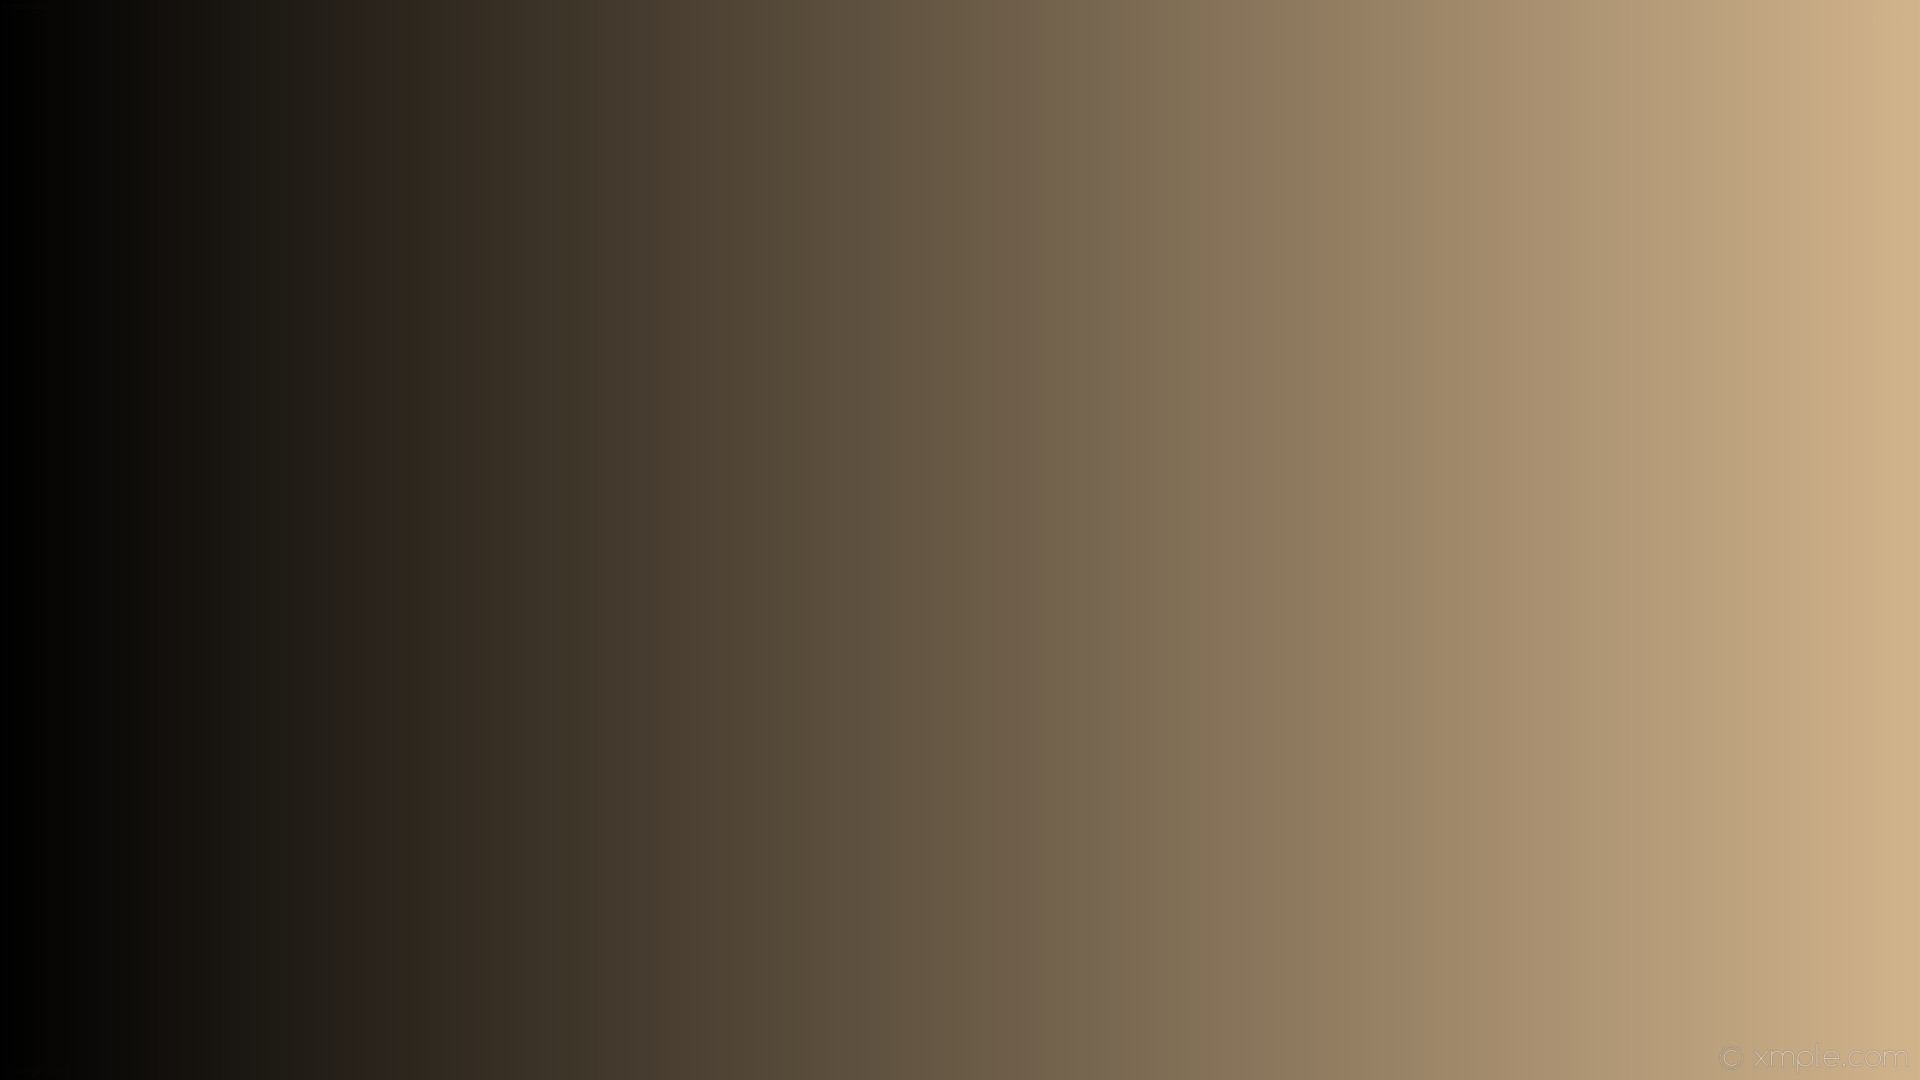 1920x1080 wallpaper brown black gradient linear tan #d2b48c #000000 0Â°